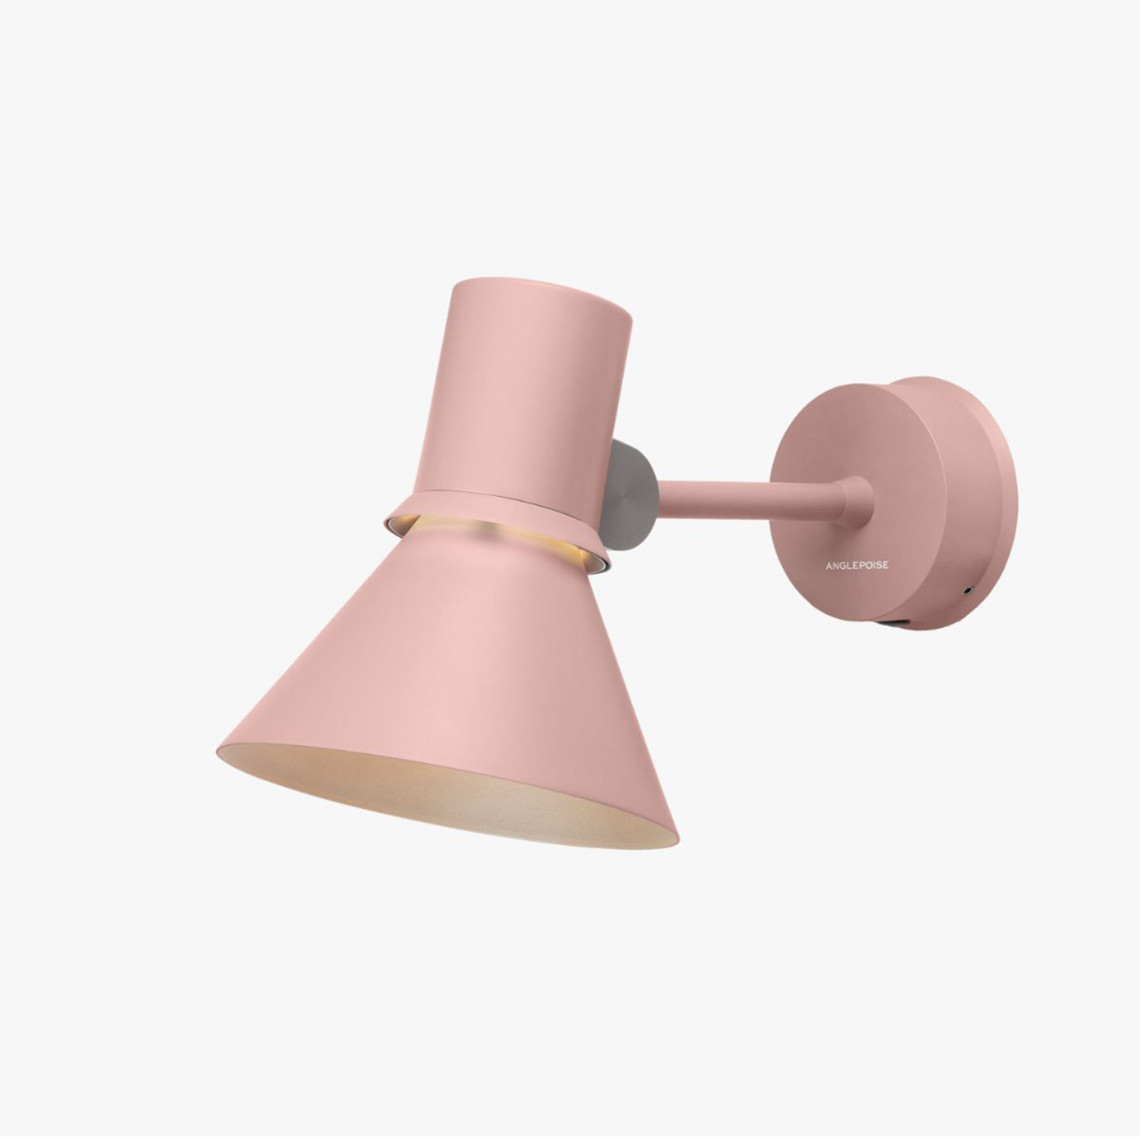 Overeenkomstig Indringing kleinhandel Wandlamp Type 80 - met of zonder snoer | DPJ